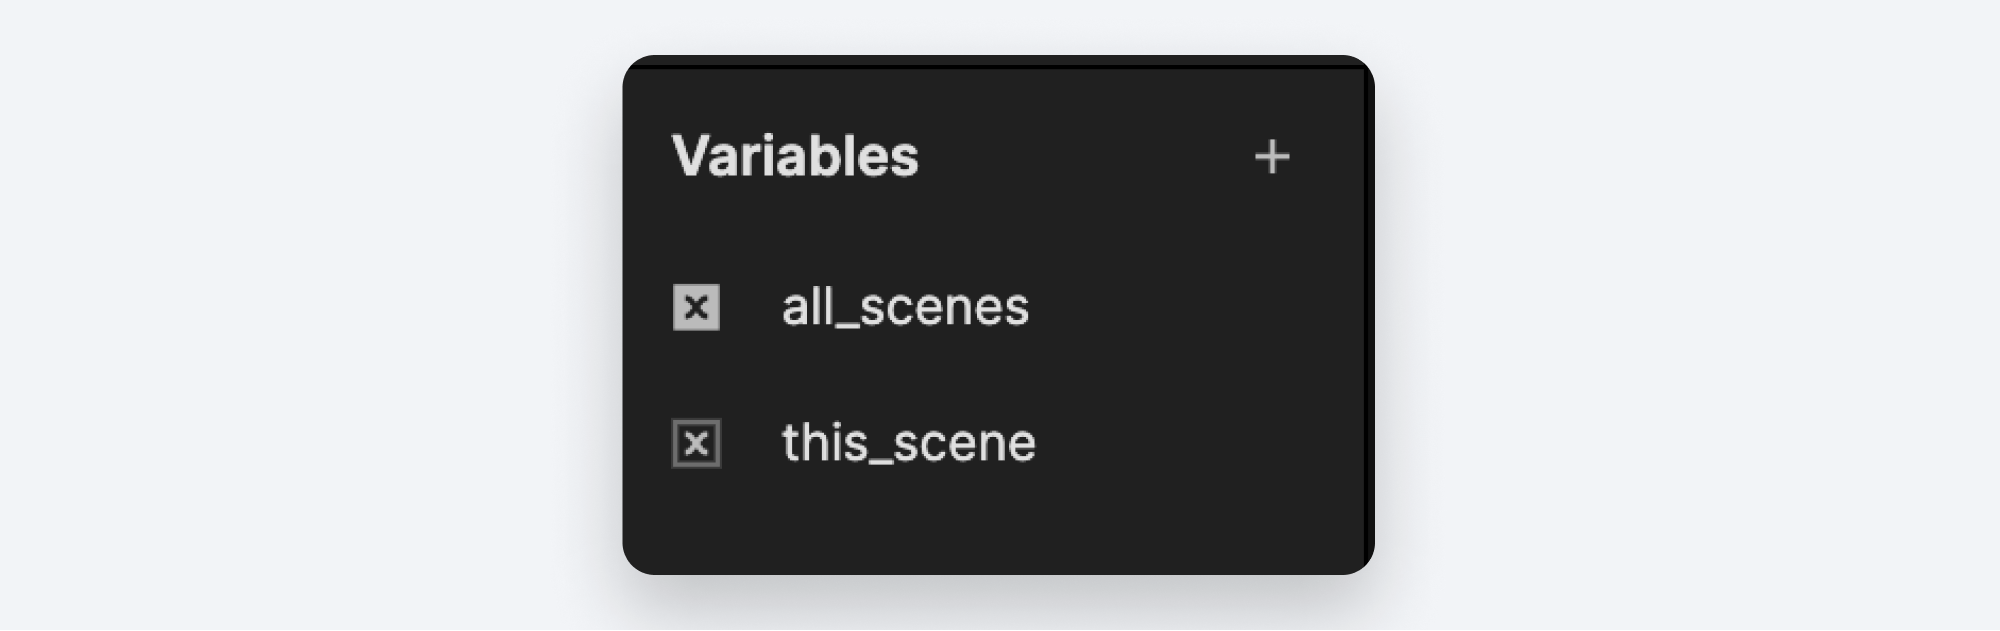 verify scene variable